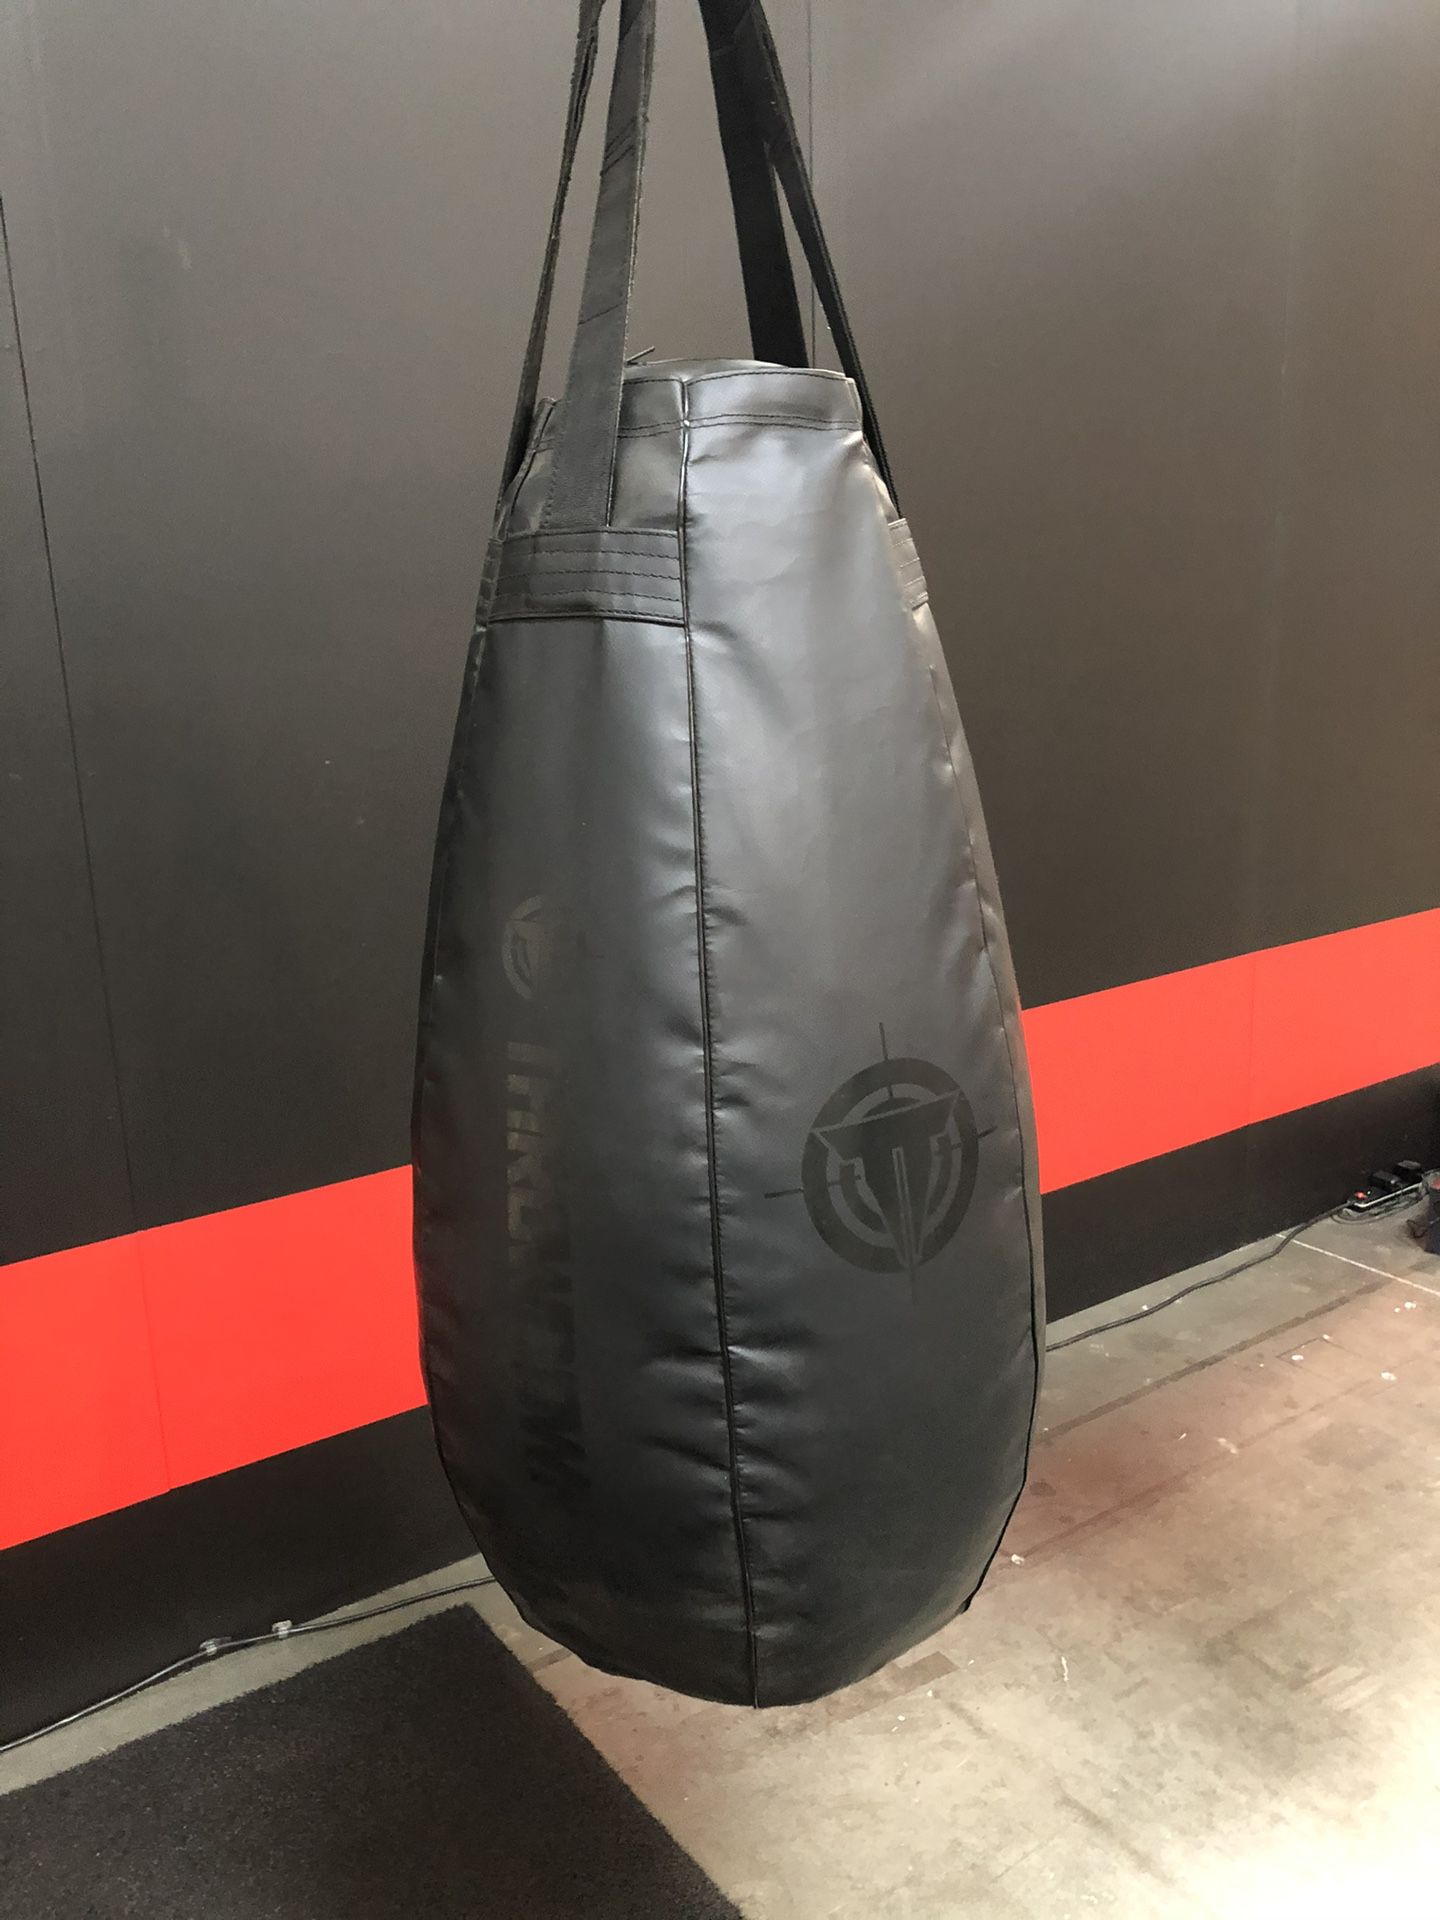 New Throwdown Teardrop Heavy Bag (Commercial/Home Gym)